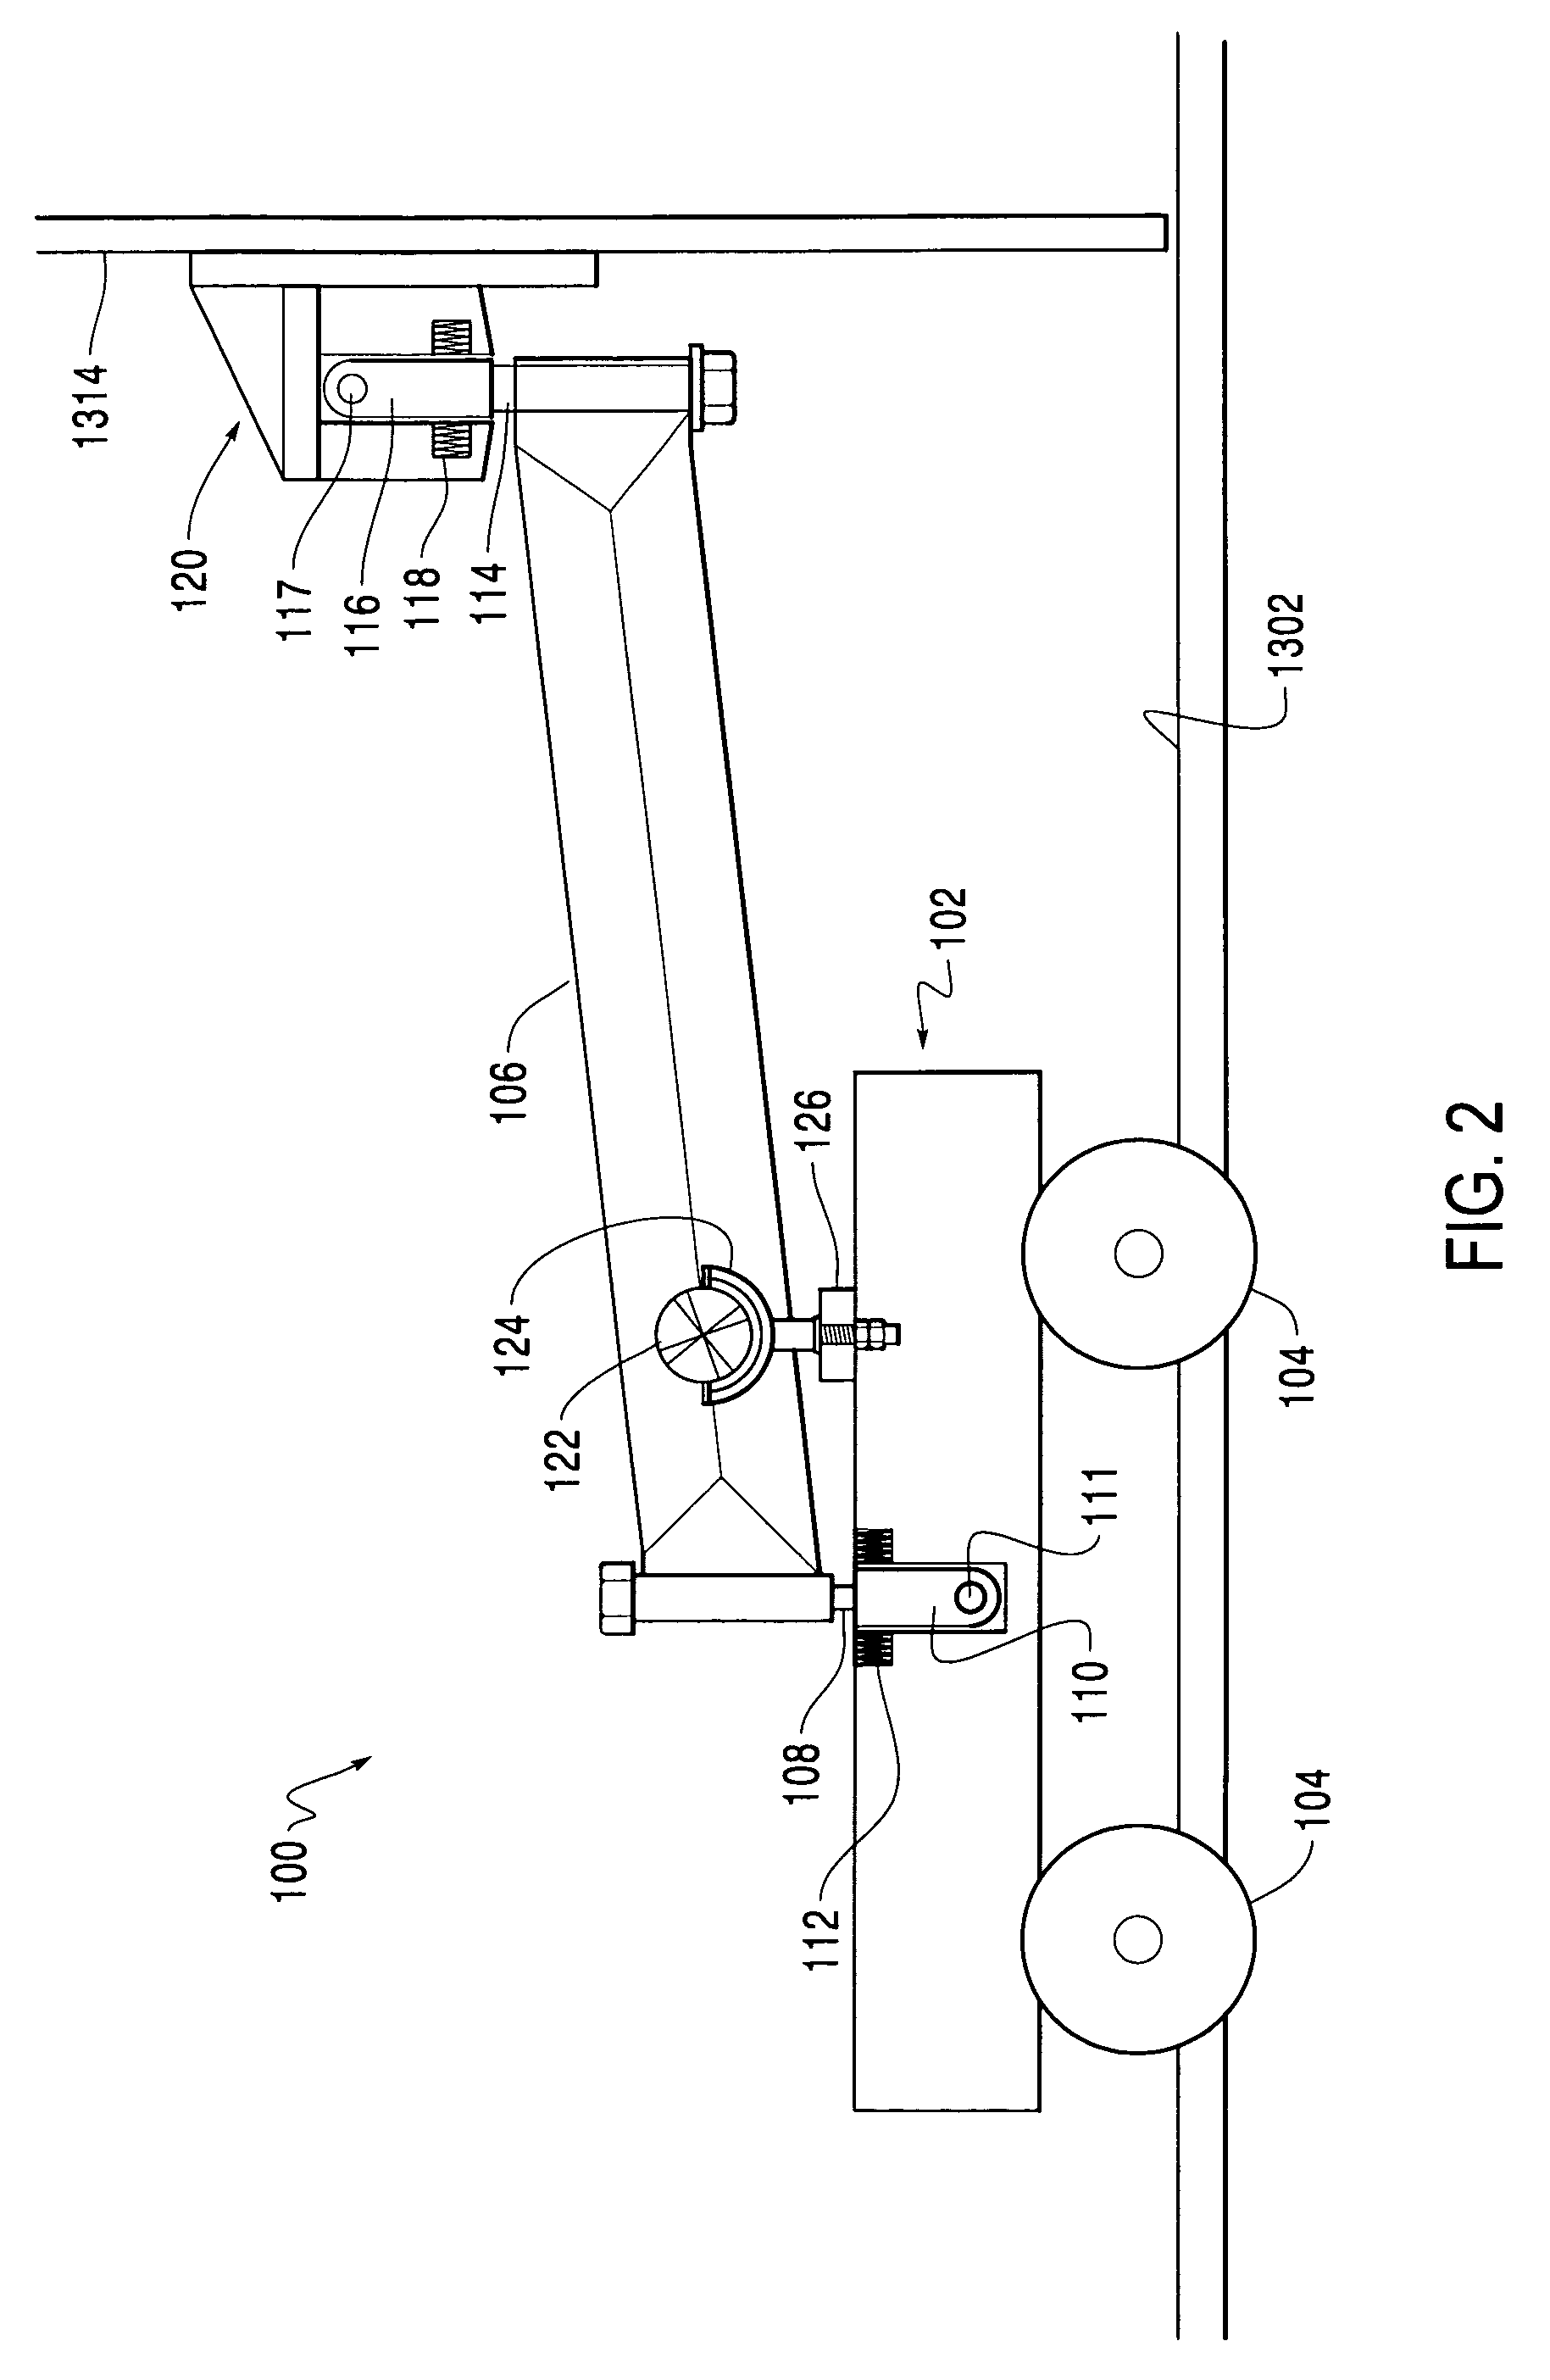 Method and apparatus for performing overhead crane rail alignment surveys